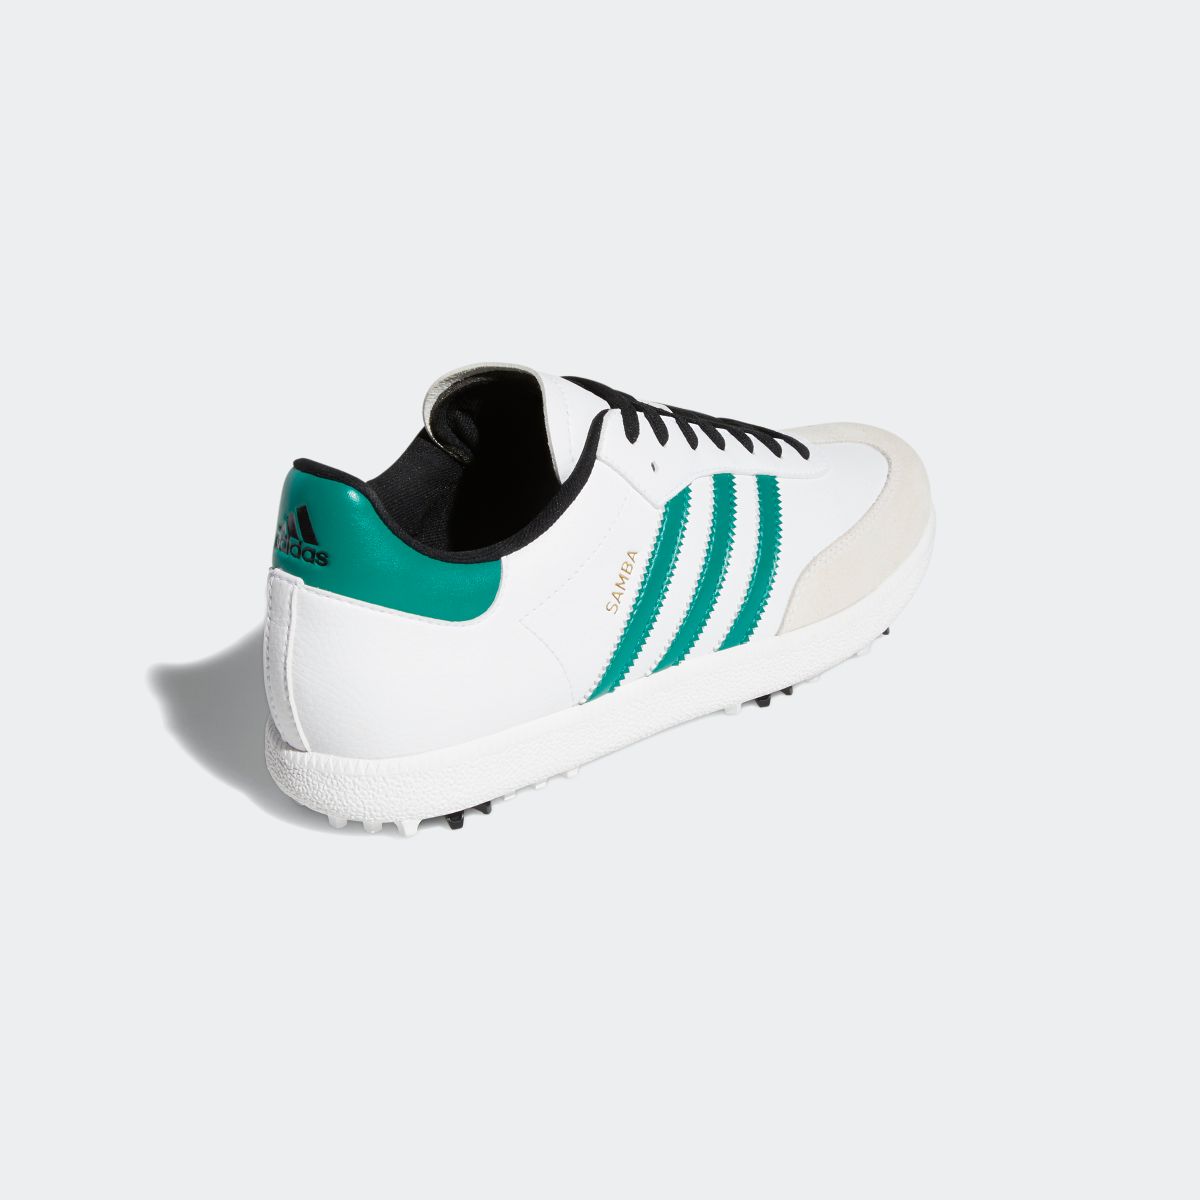 samba golf shoes